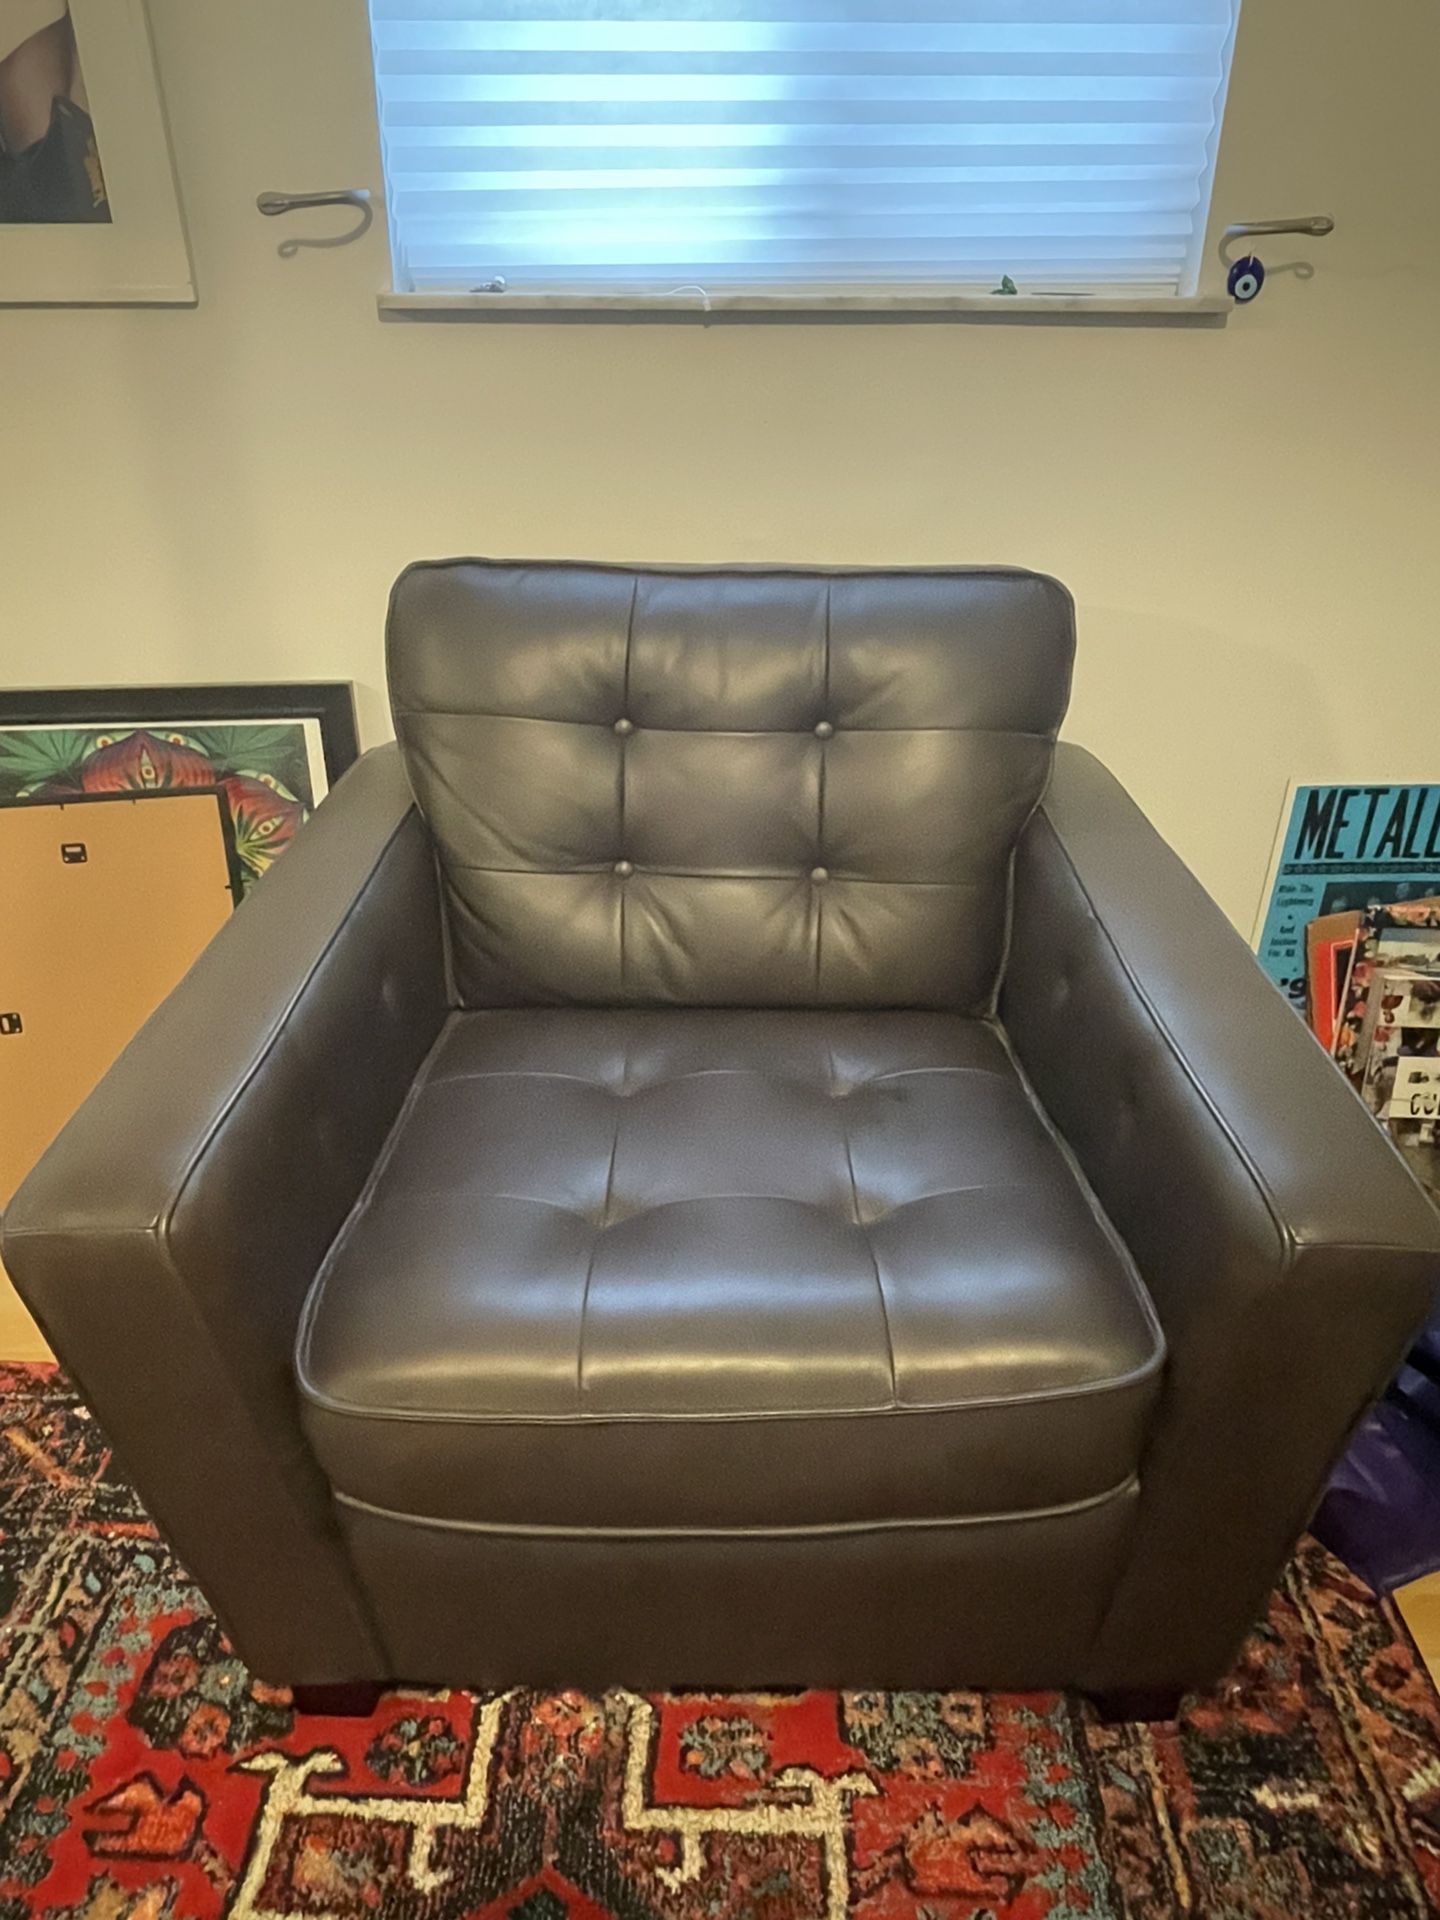 Leather Sofa Chair Mid Century Modern Style